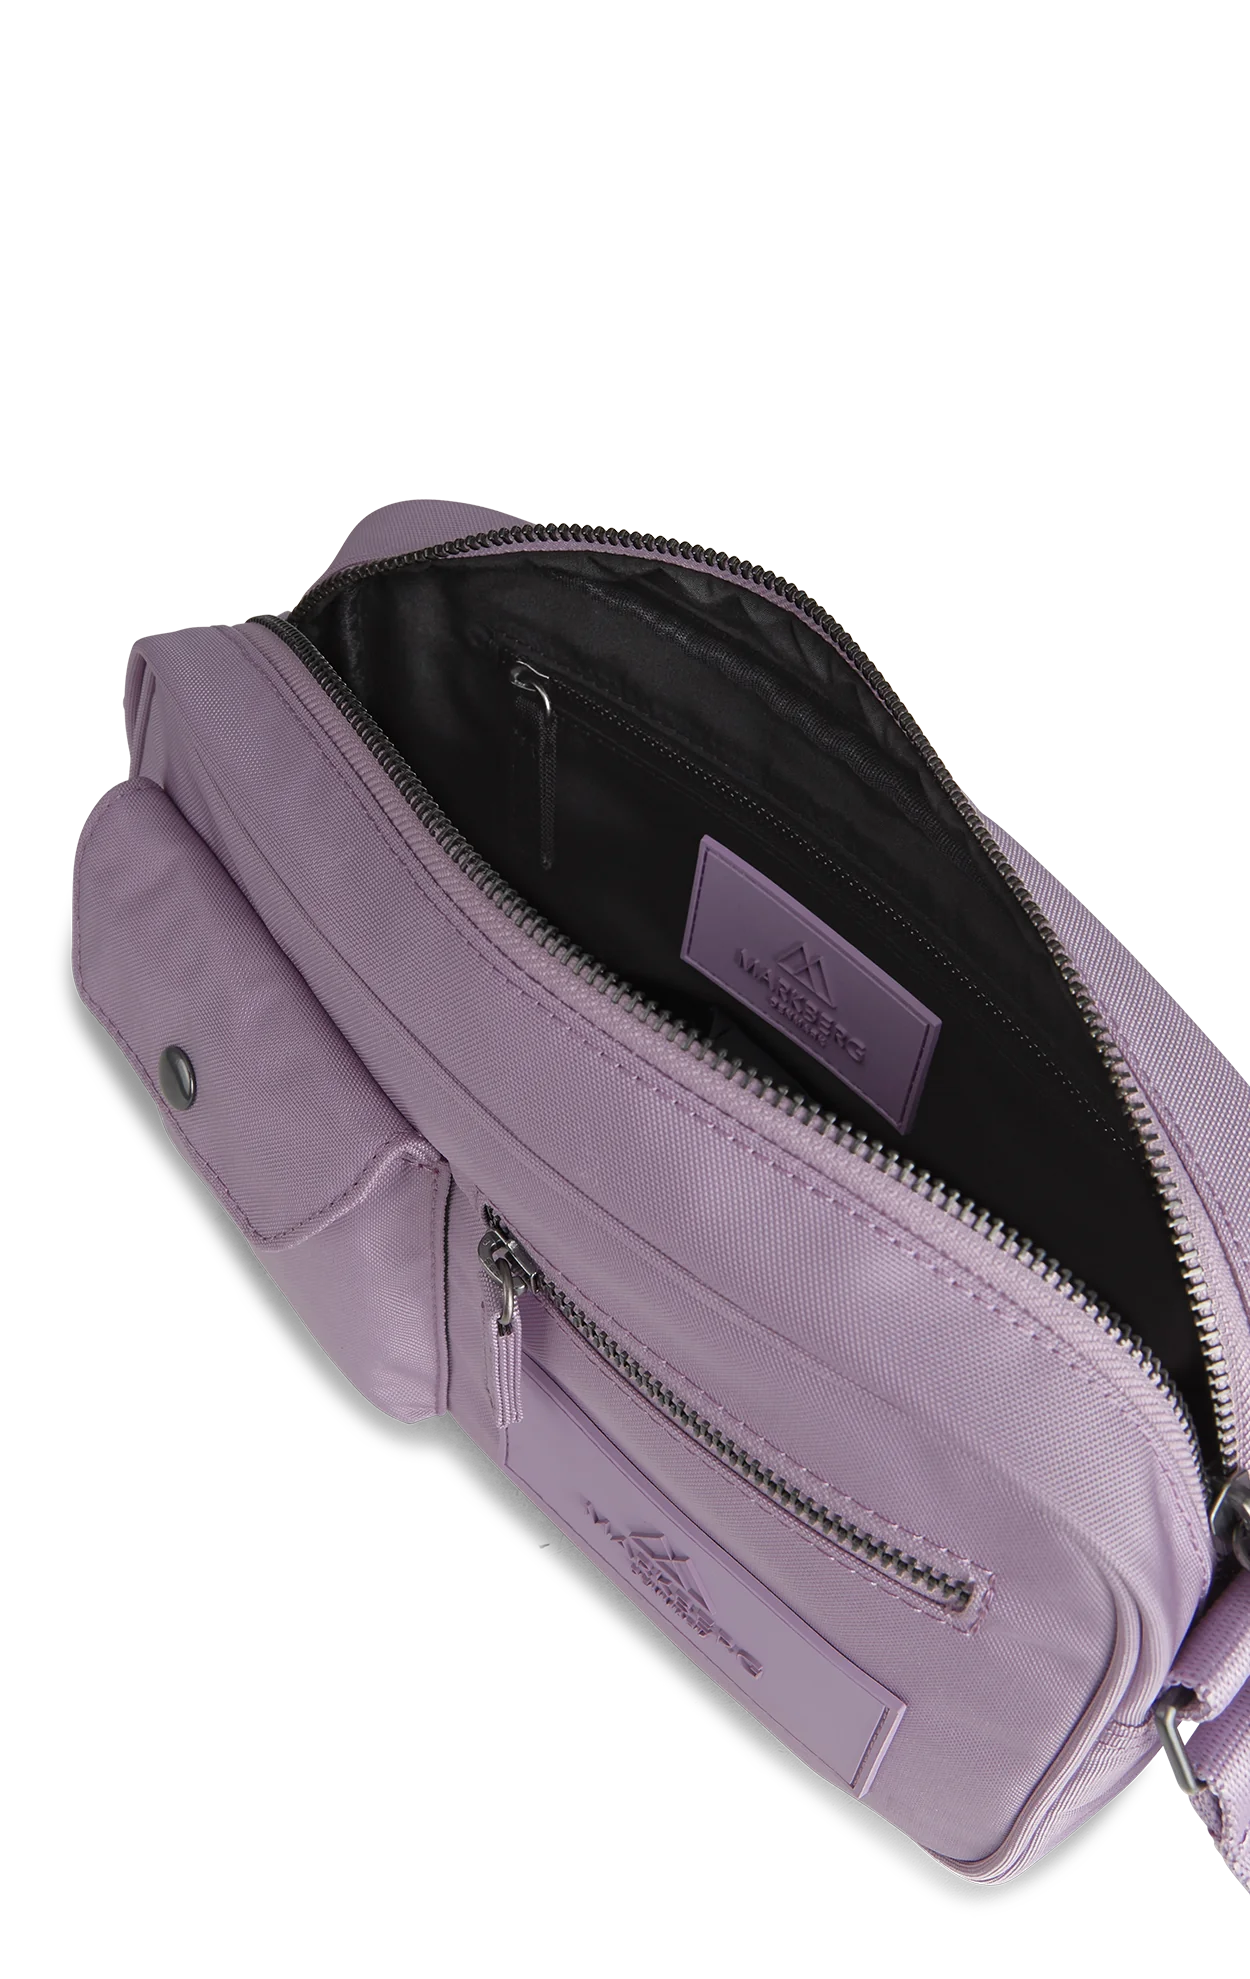 A partially unzipped Markberg Darla Crossbody Bag in Polar Purple against a transparent background.